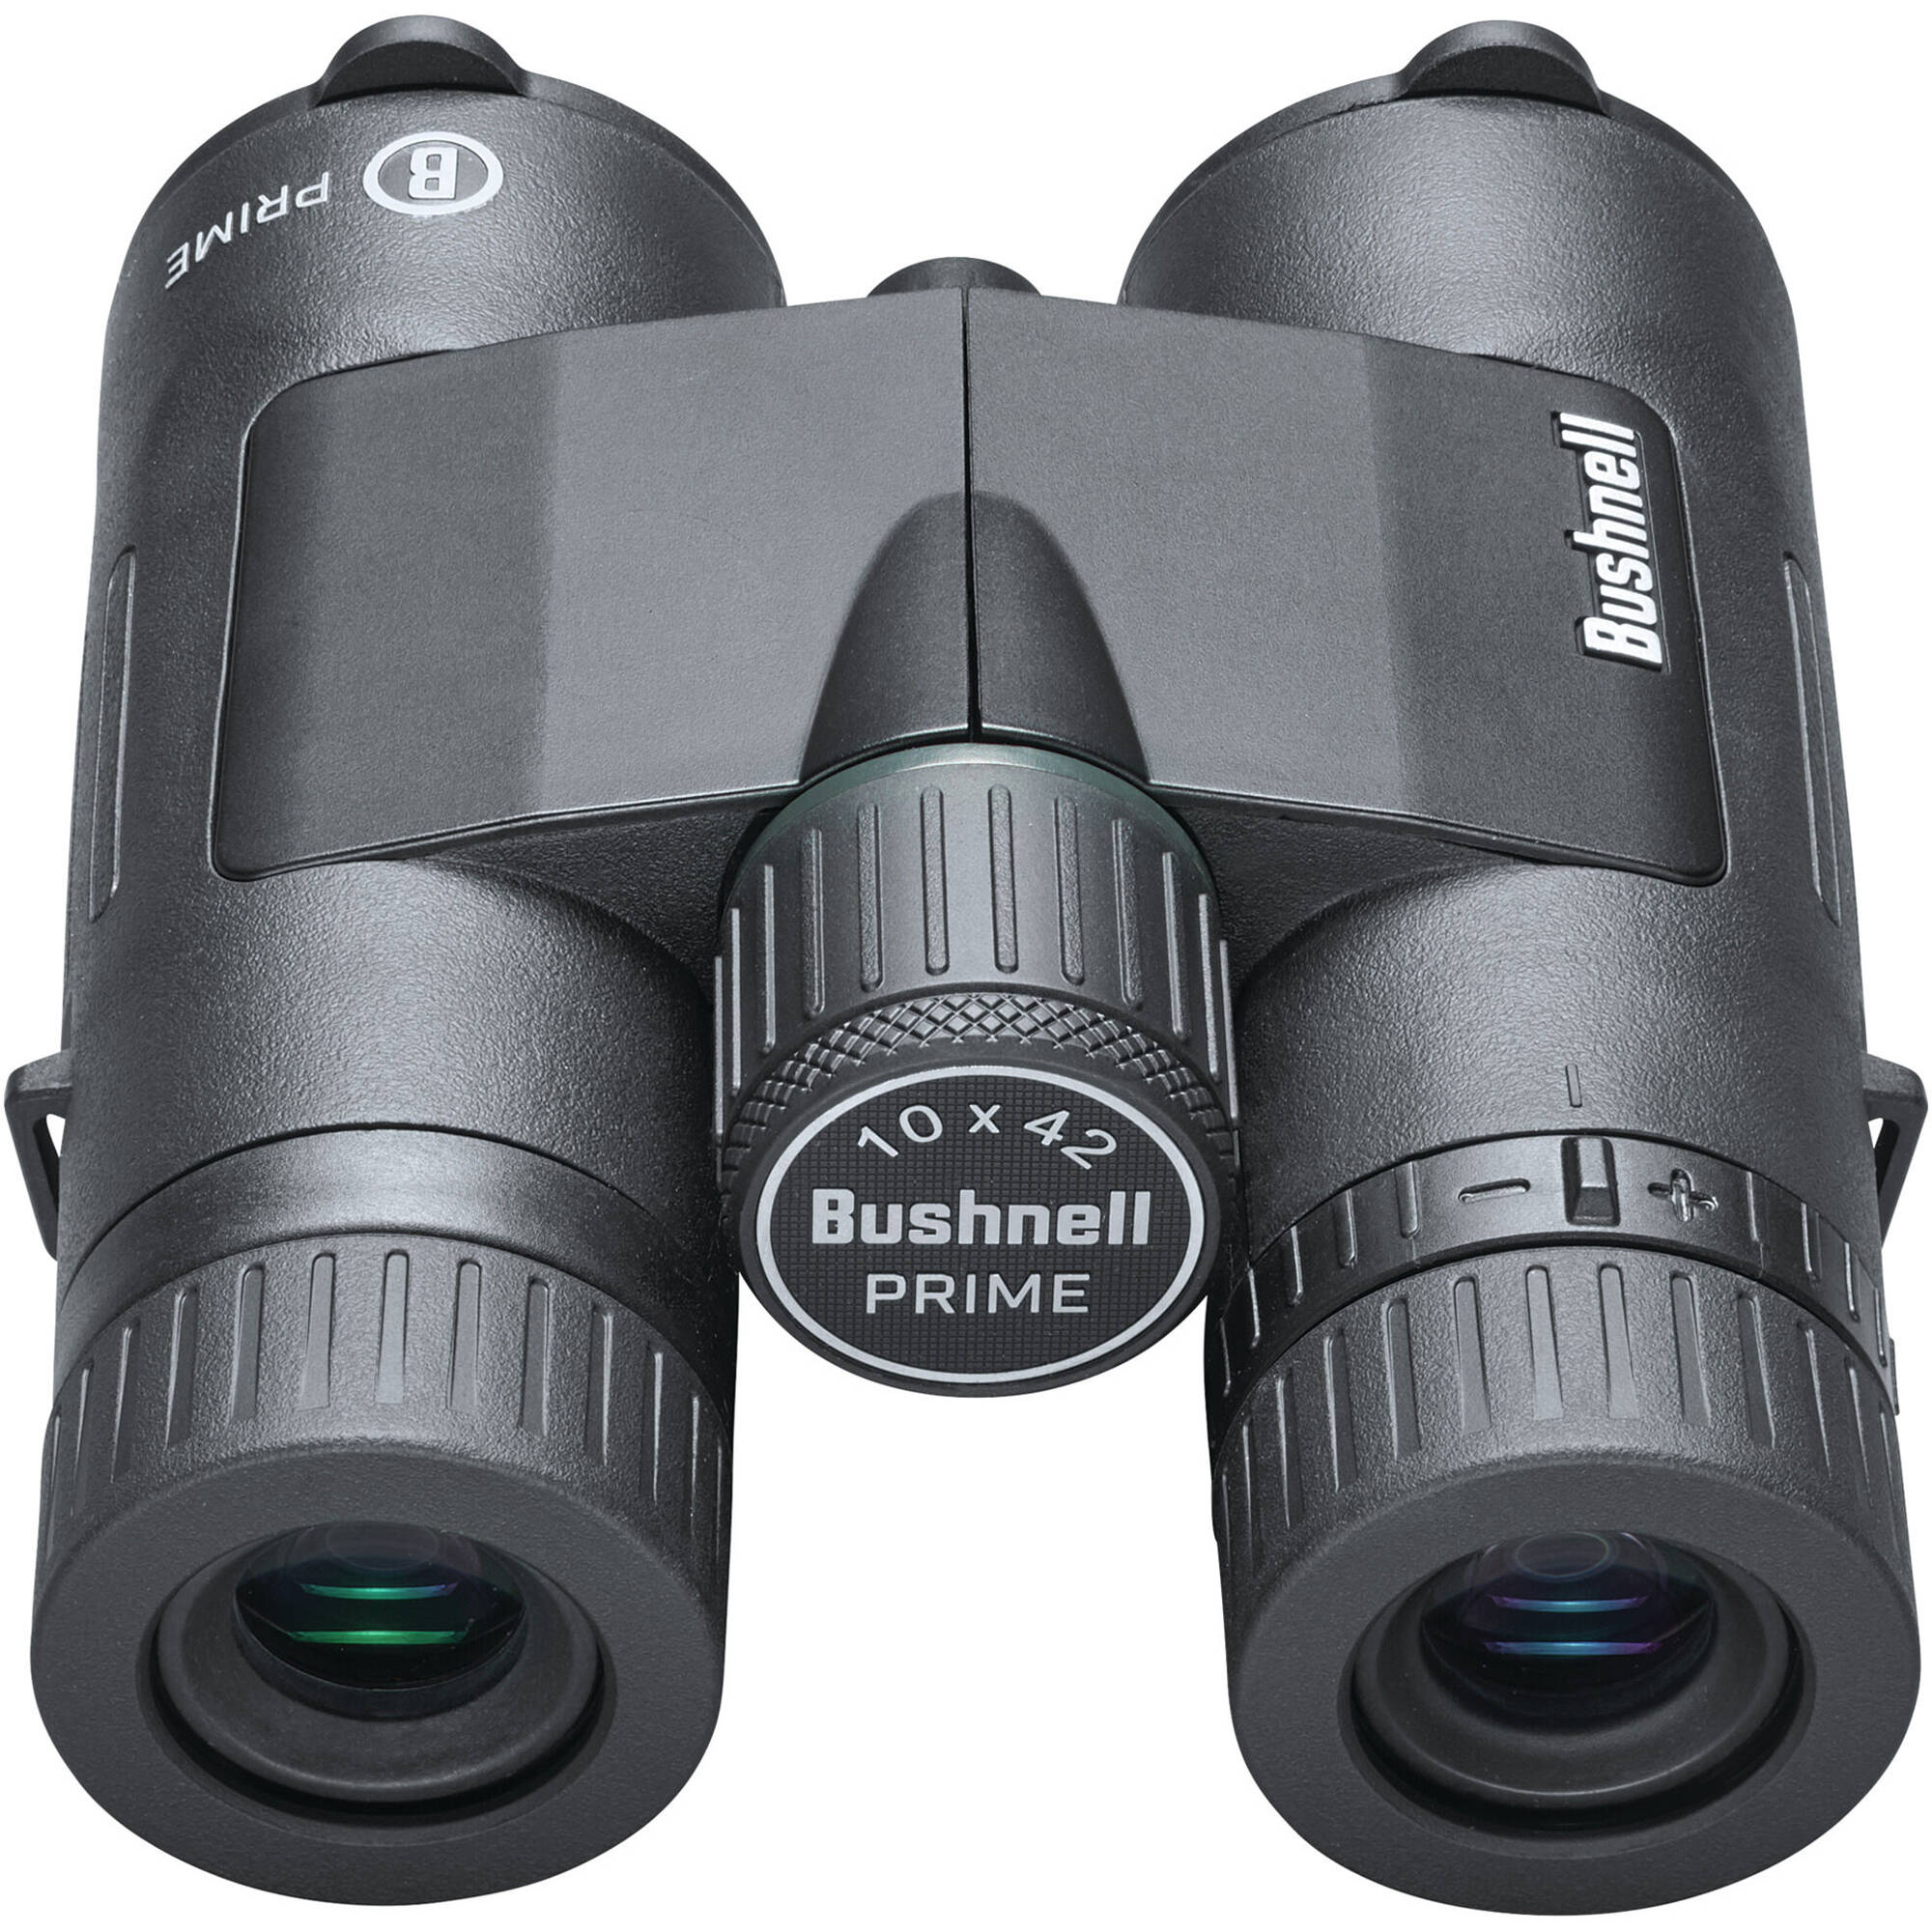 Bushnell 10x42 Prime Waterproof Binoculars